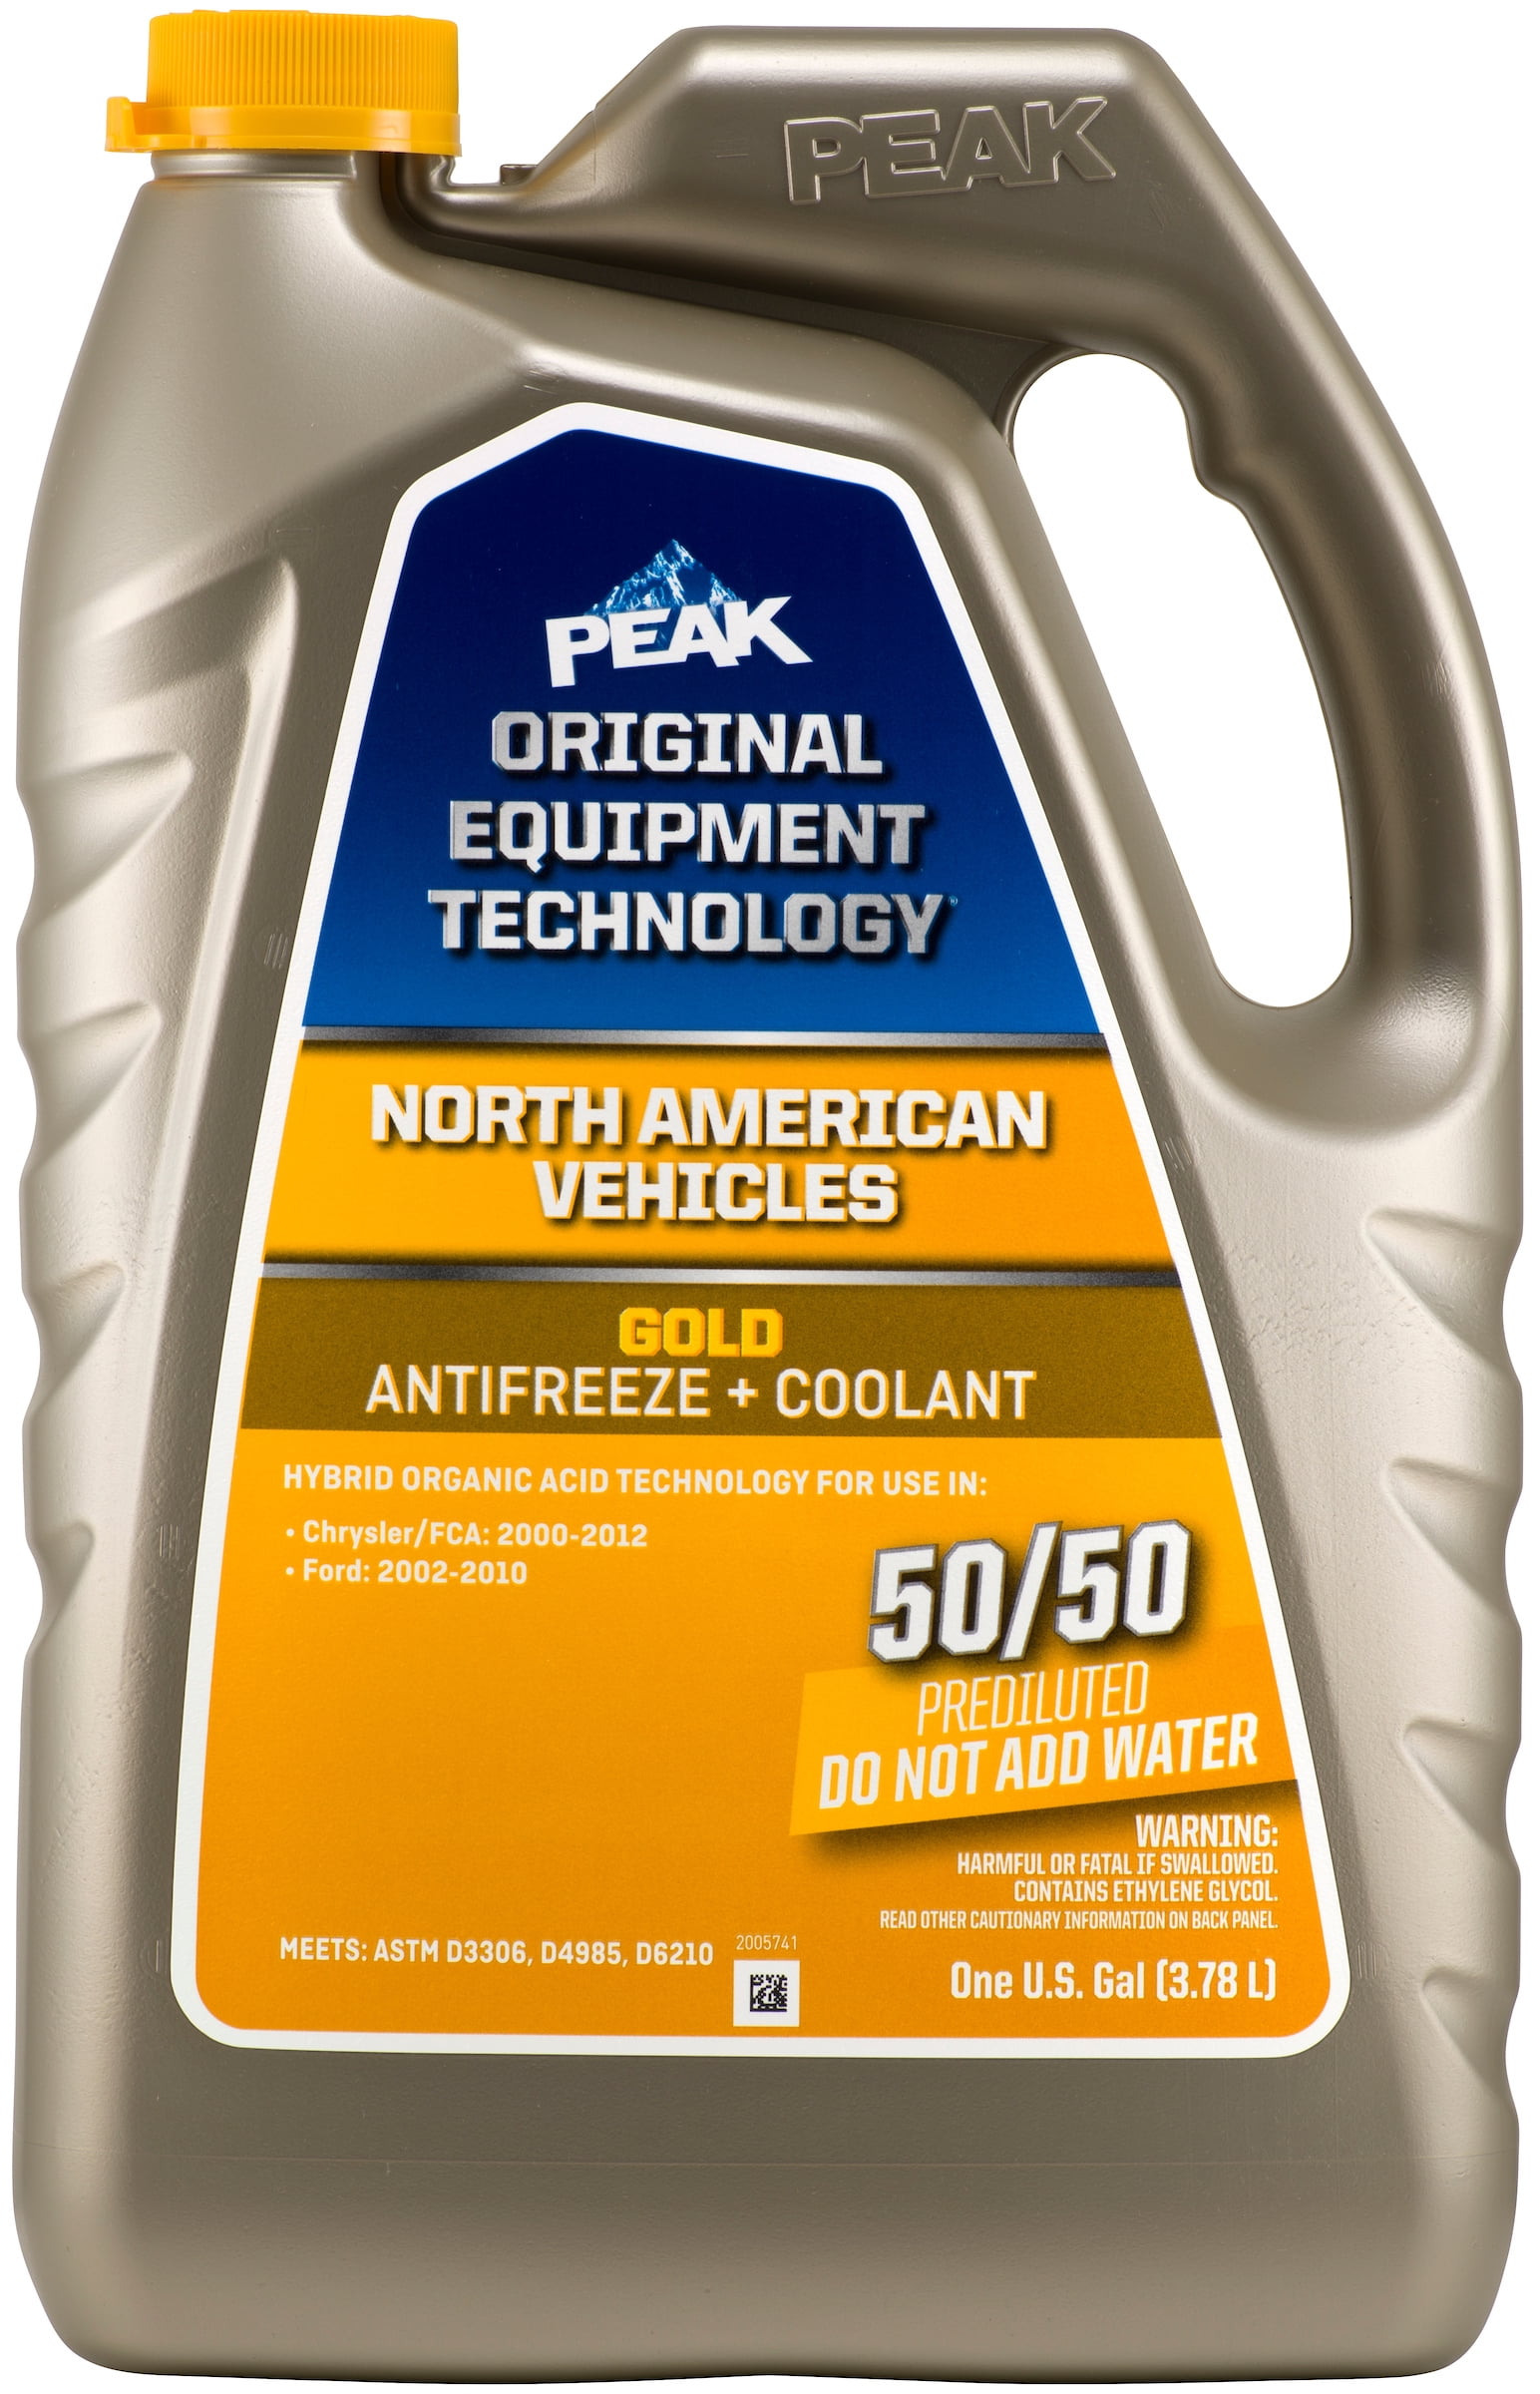 peak-original-equipment-technology-antifreeze-coolant-for-north